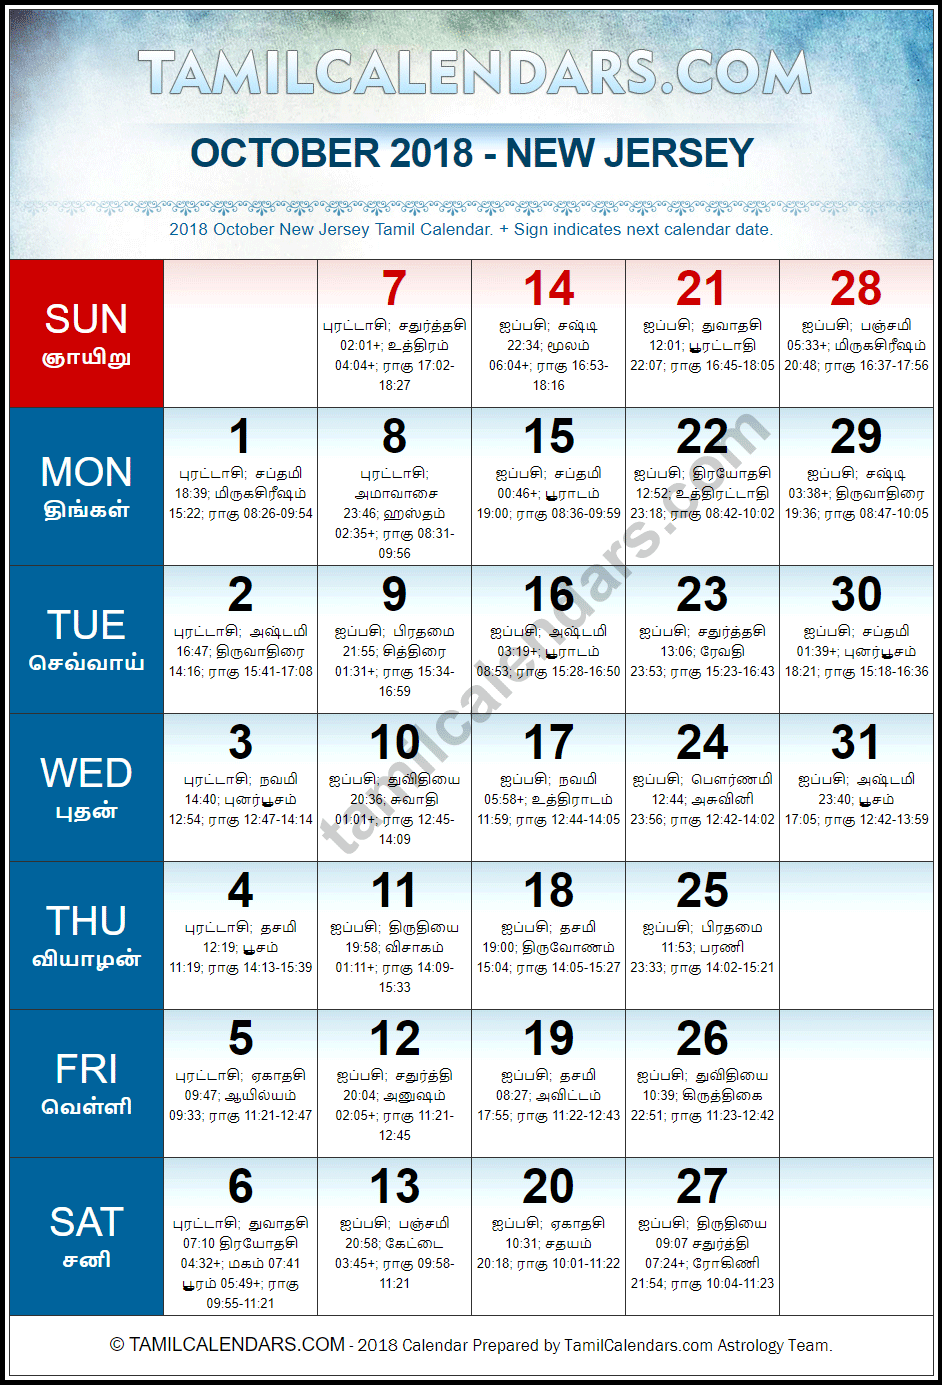 October 2018 Tamil Calendar for New Jersey, USA